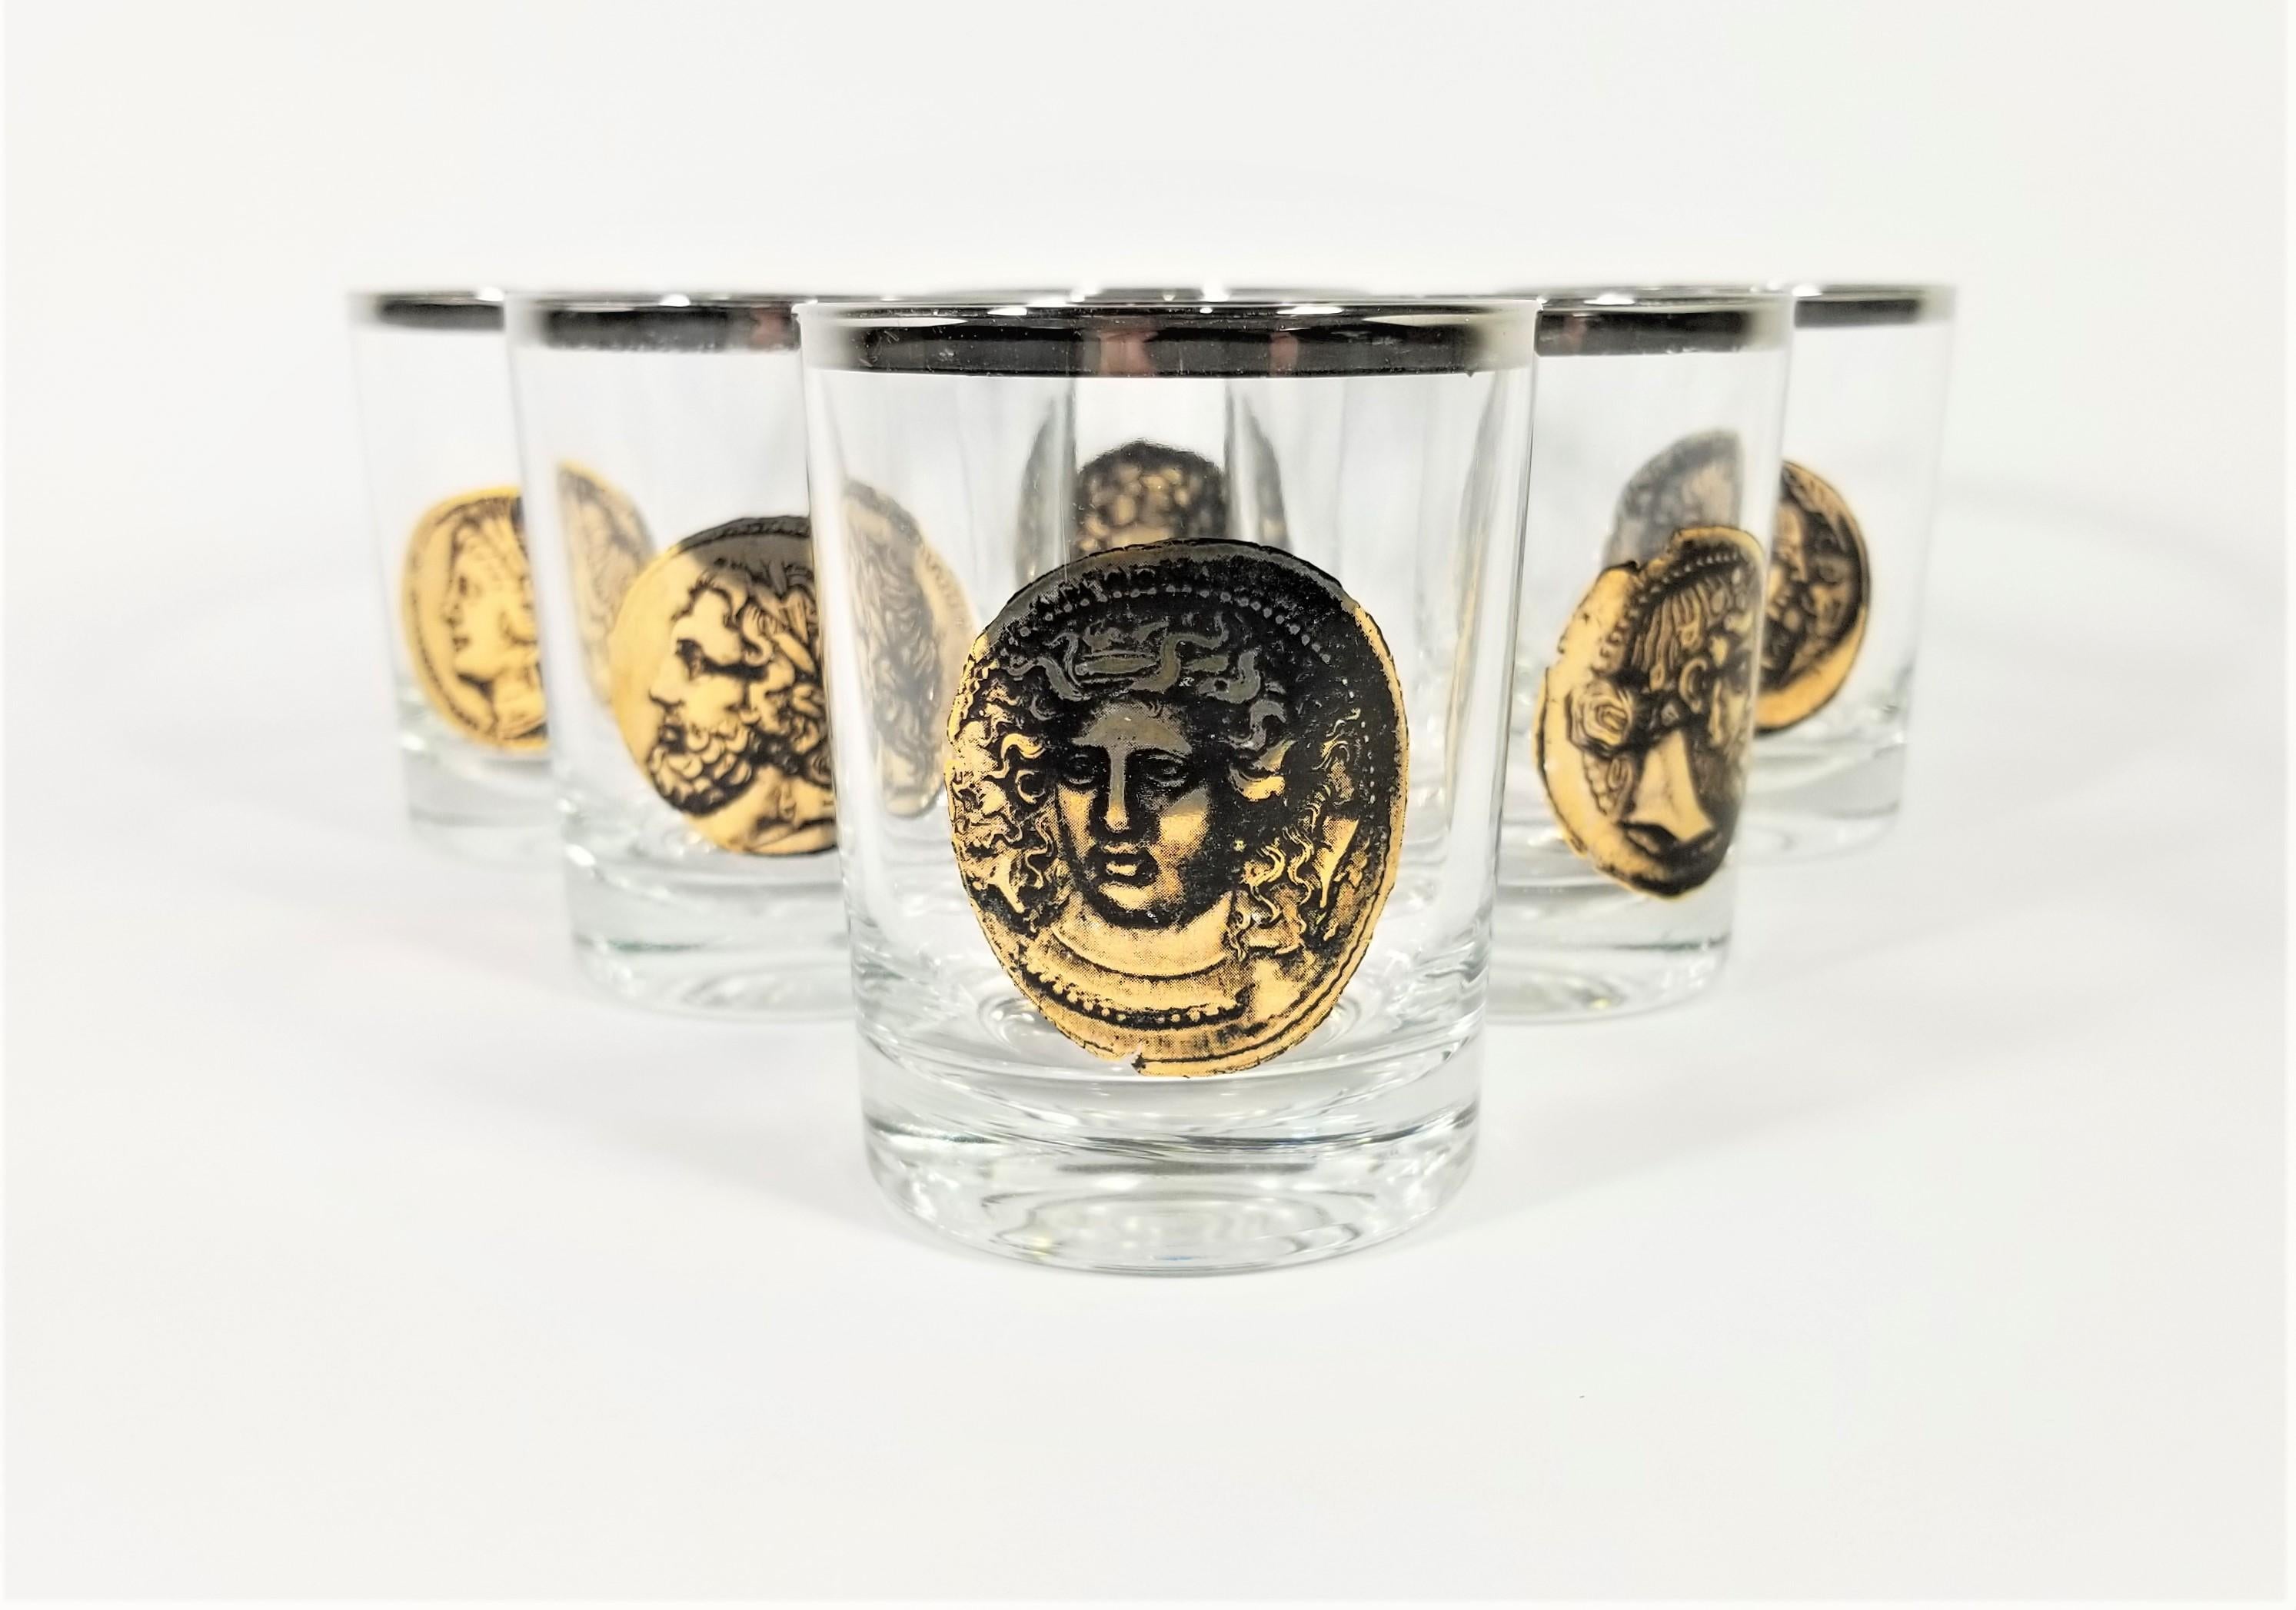 20th Century French Greek Roman Gods Midcentury Glassware Barware Made in France Set of 6